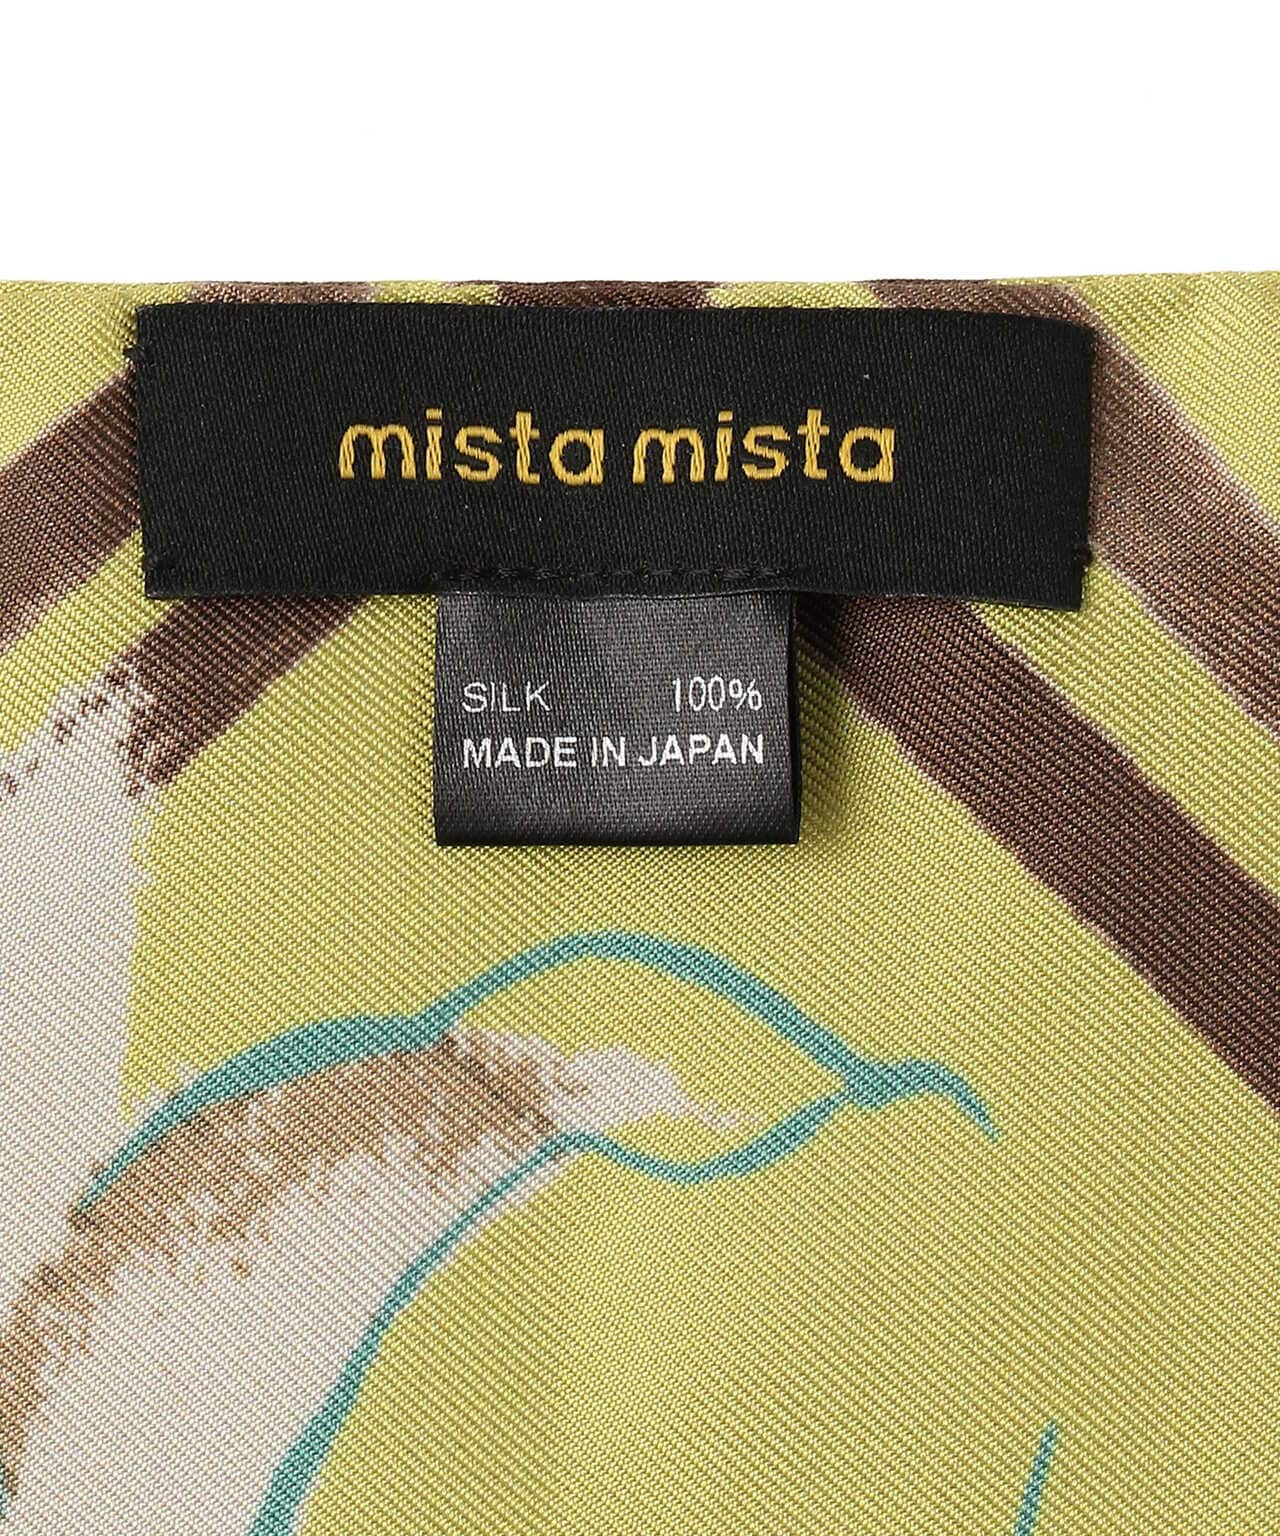 mista mista/ミスタ ミスタ/シルクスカーフ 縦